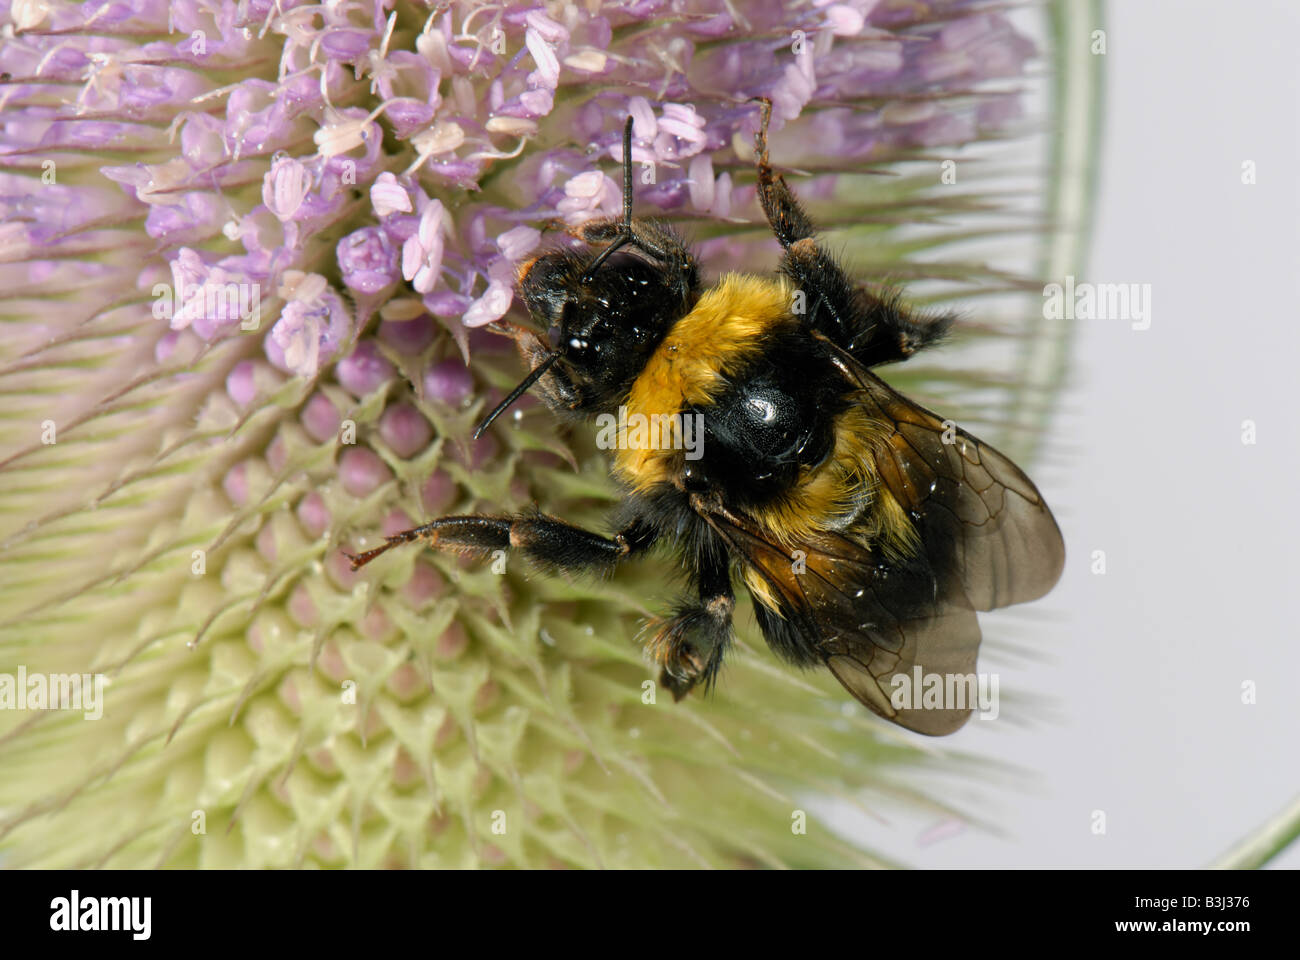 Jardín de abejorros Bombus hortorum alimentándose de néctar de flores teasel Foto de stock